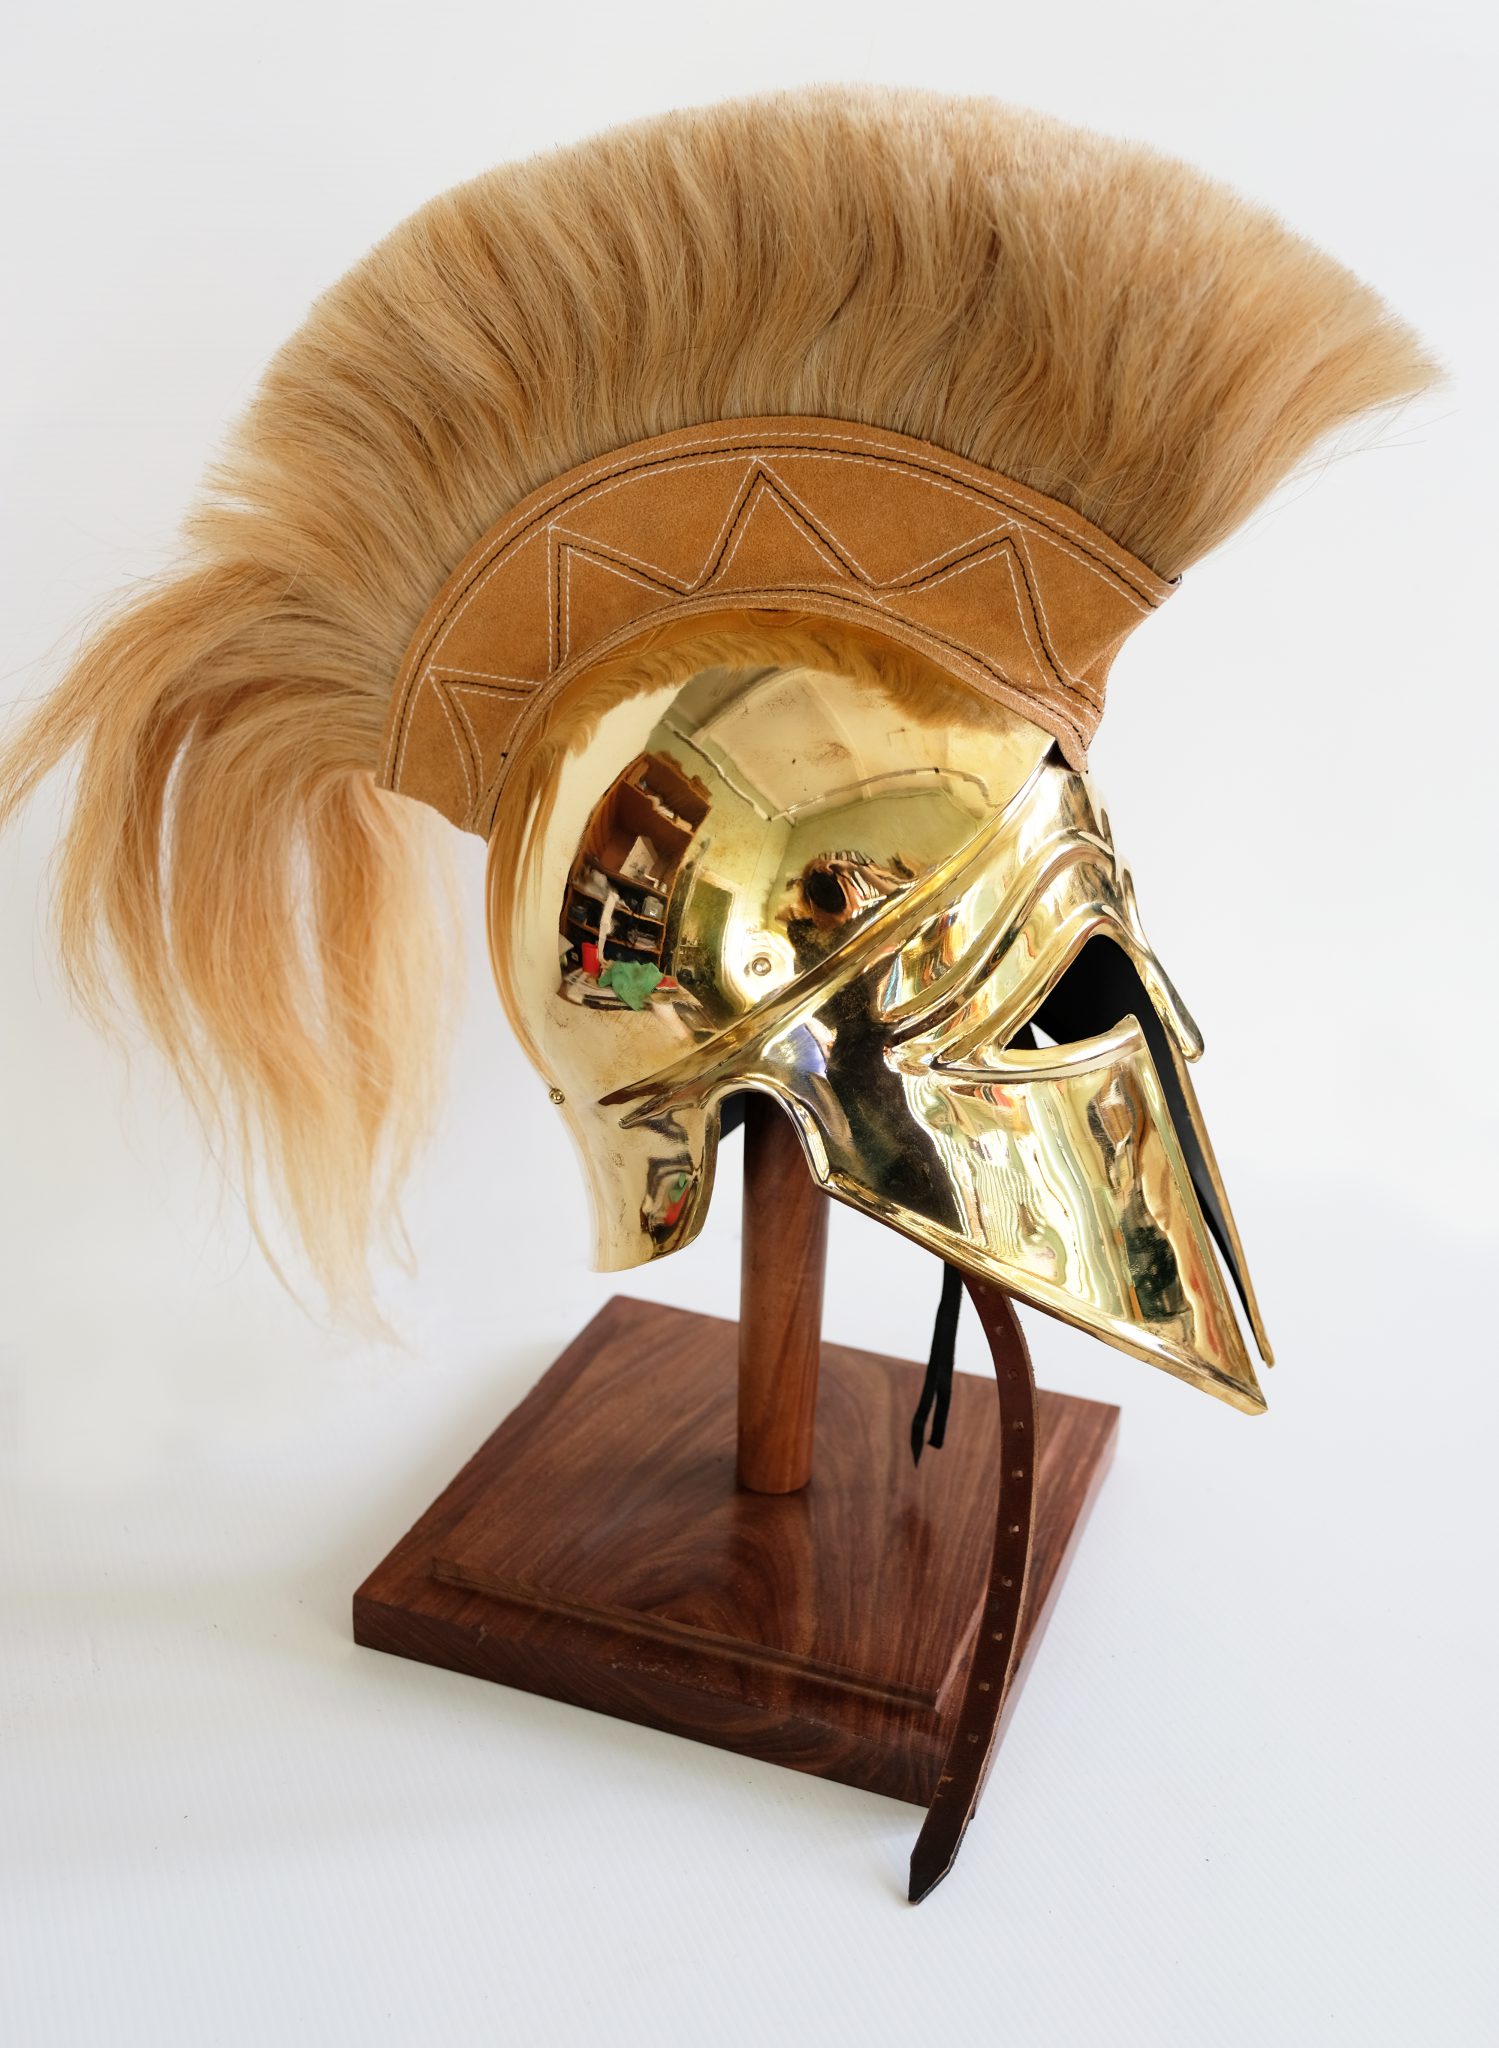 Photo of a Corinthian helmet